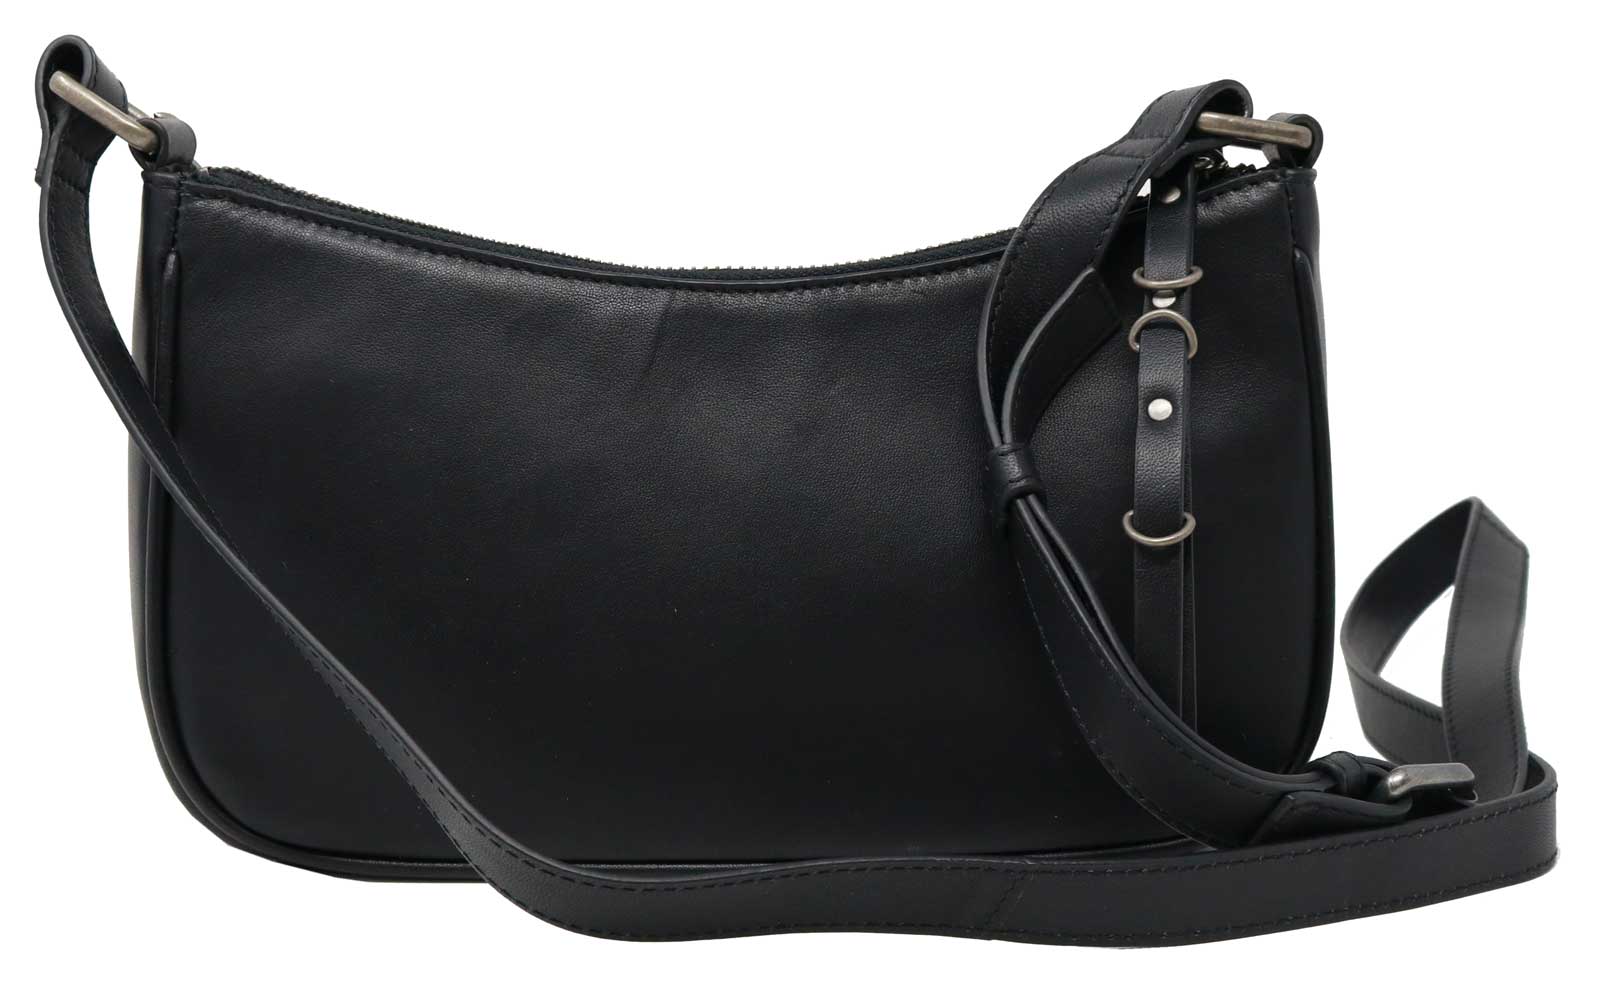 Lovin our new ombré purses! - Black Diamond Harley-Davidson